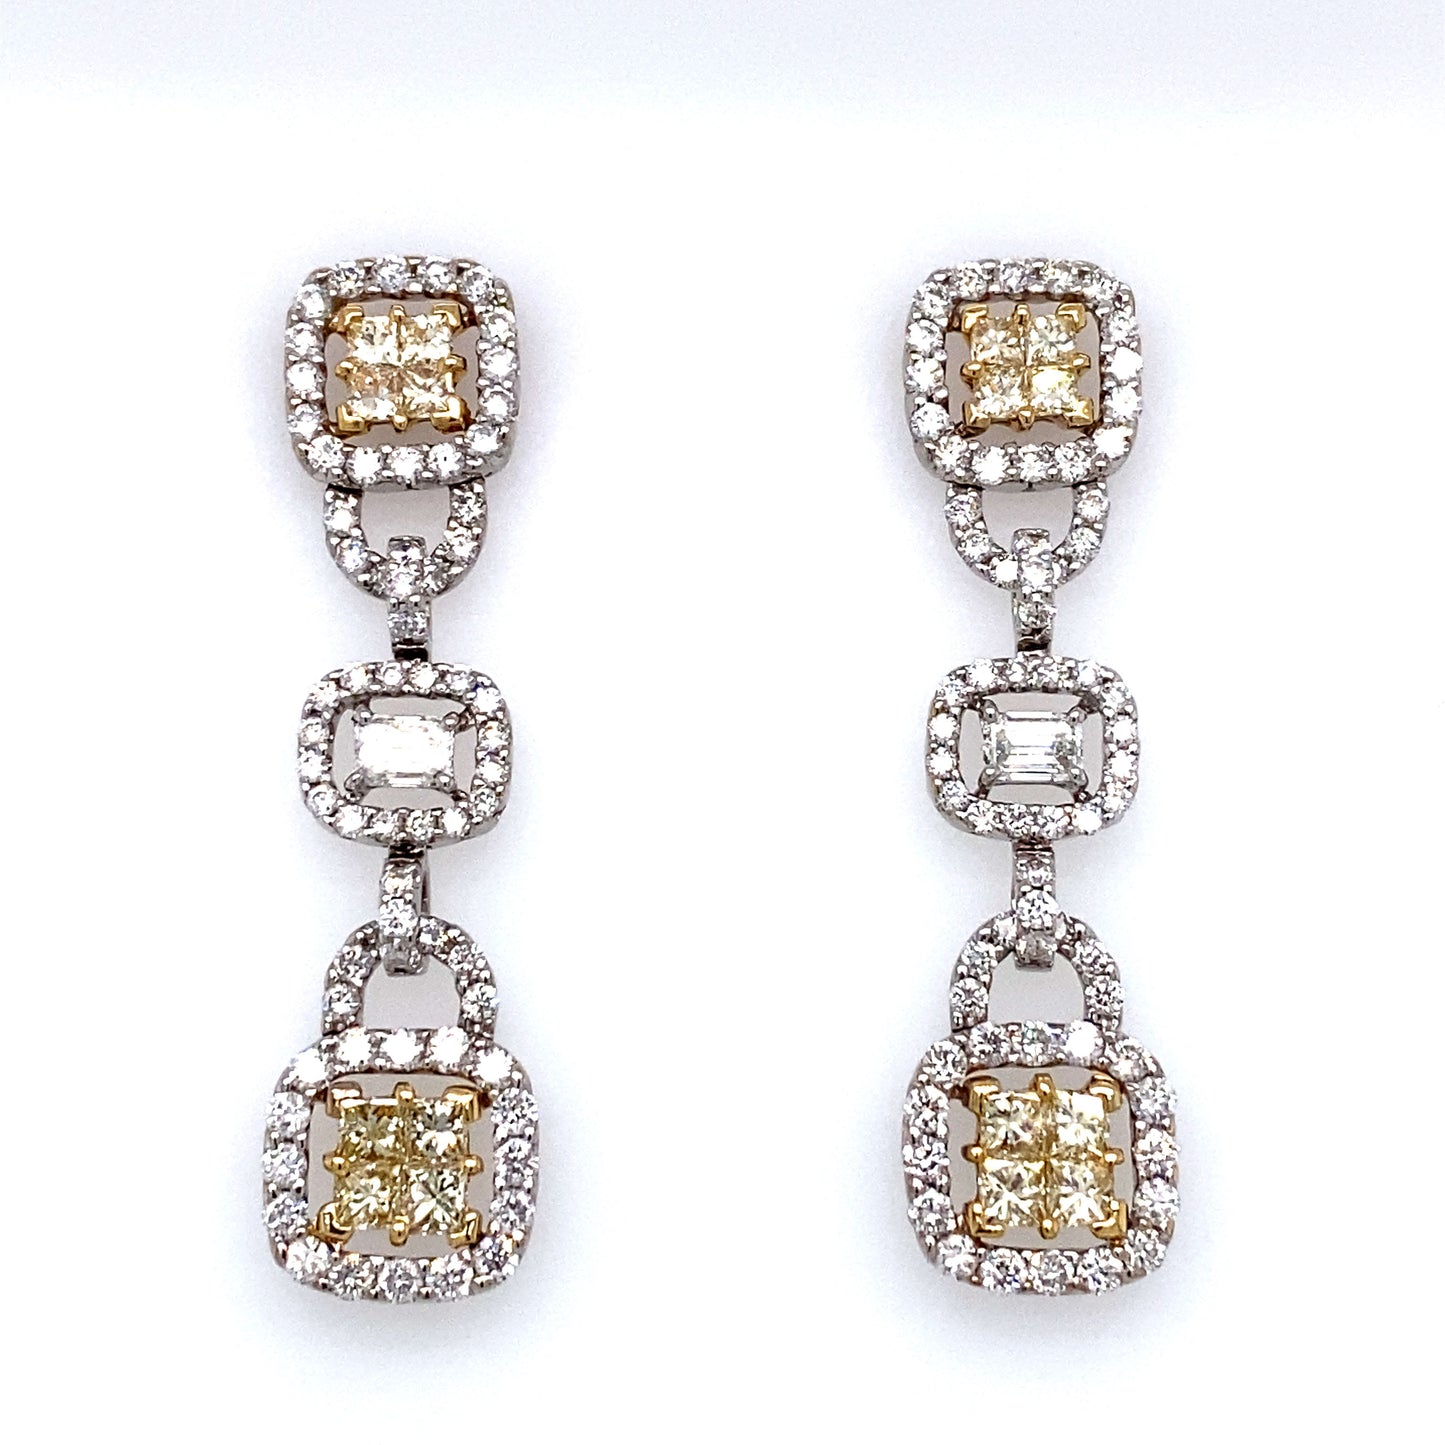 Circa 1980s White and Yellow Diamond Dangle Earrings in 18K White Gold